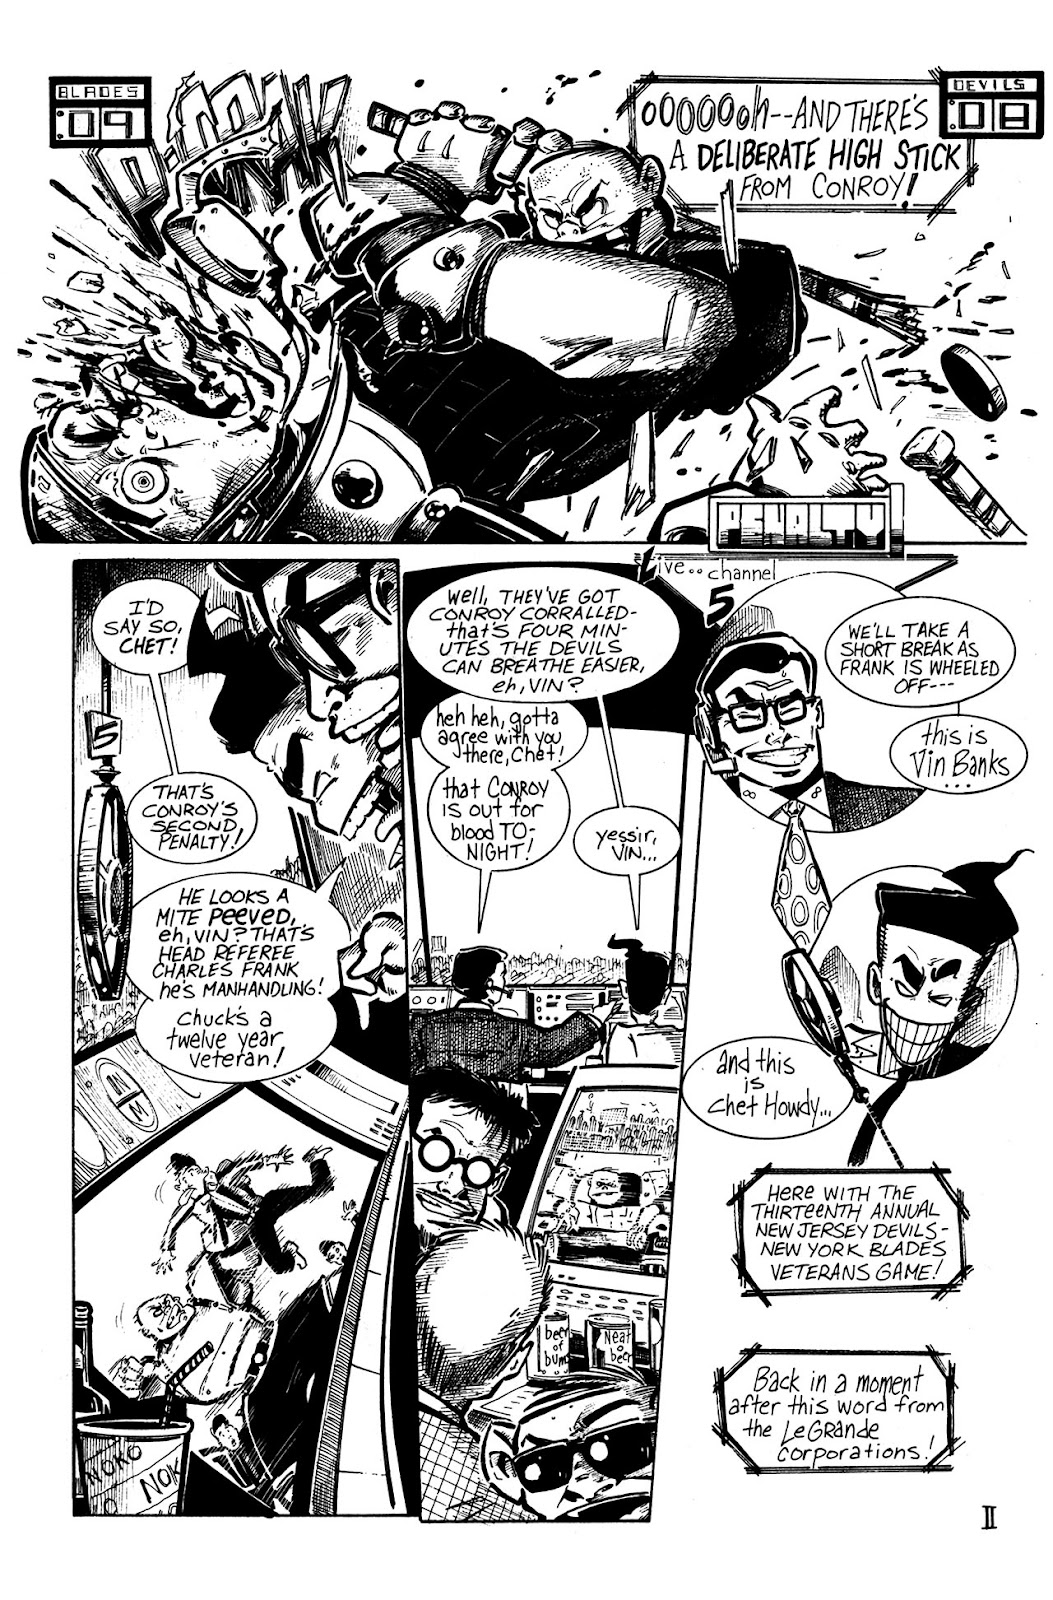 Pirate Corp$! (1989) 2 Page 4